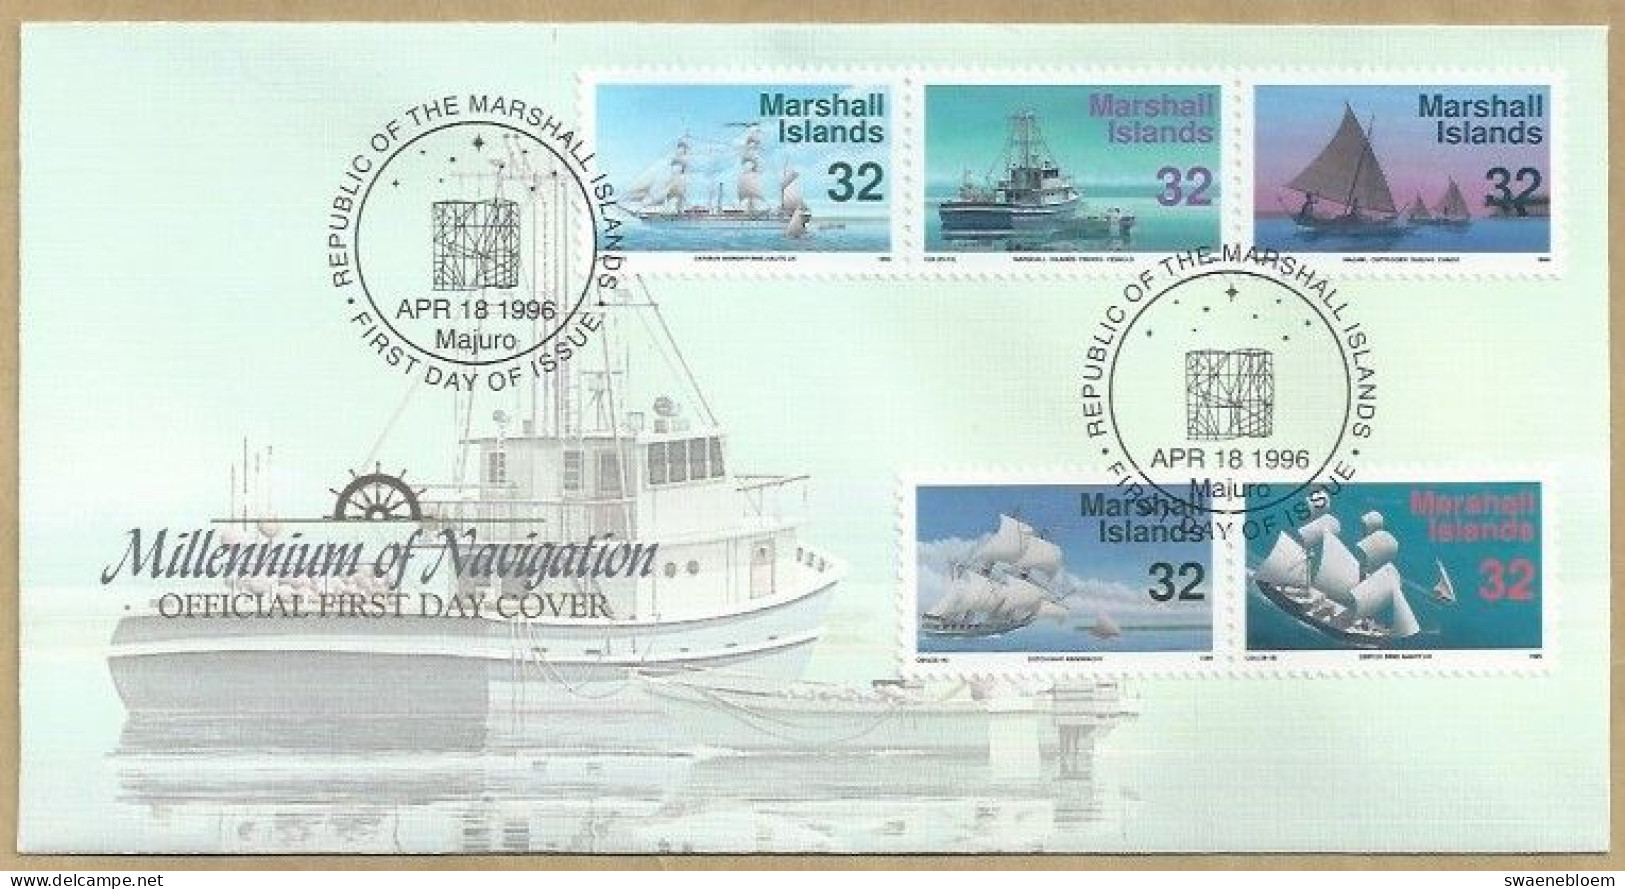 FDC. REPUBLIC OF THE MARSHALL ISLANDS. APR 18 1996 MAJURO. MILLENNIUM OF NAVIGATION. C94.FDC. (3). - Marshall